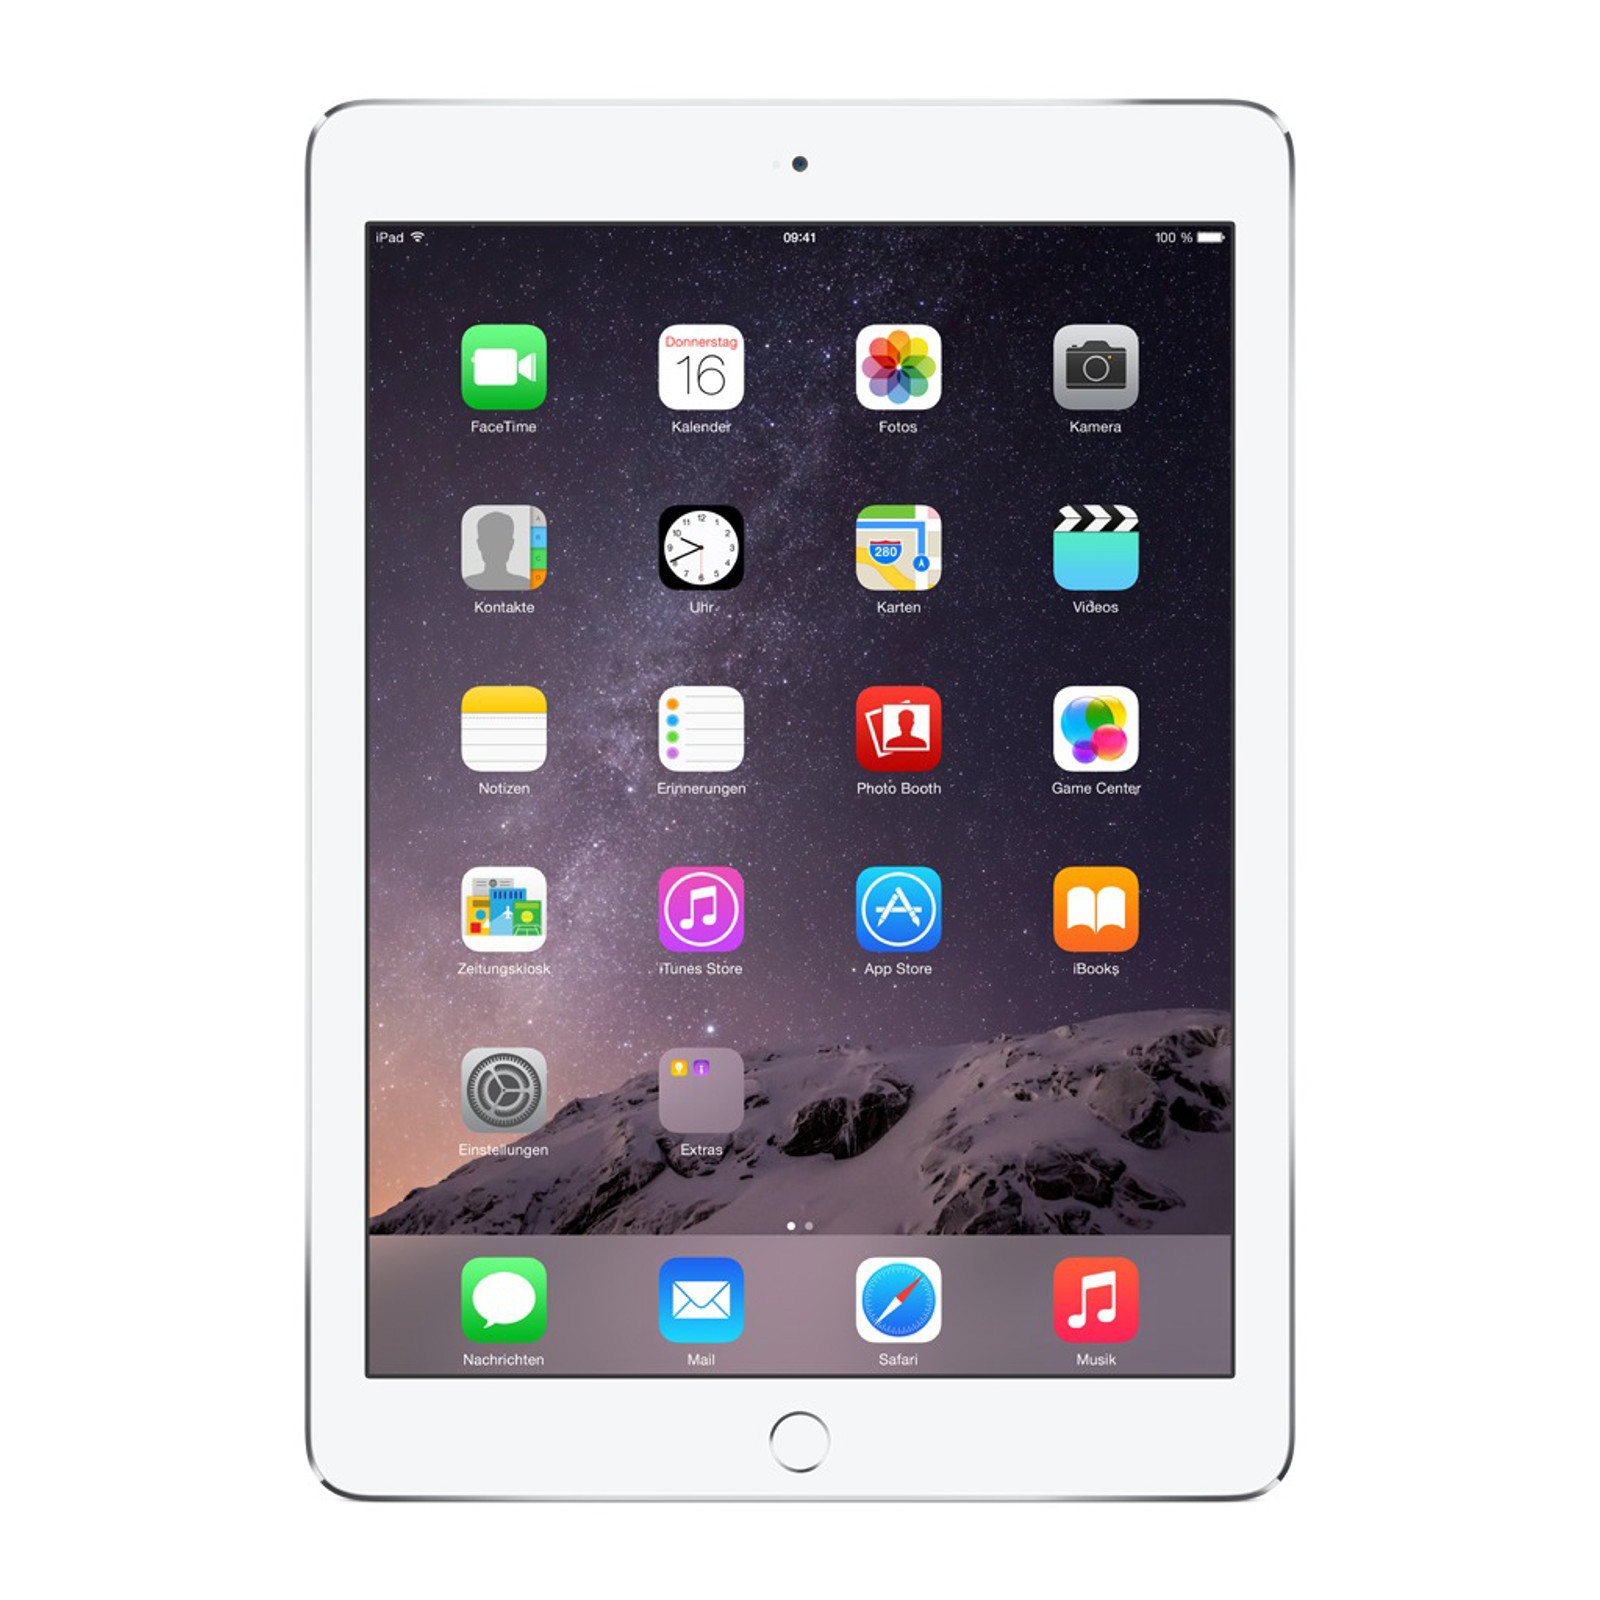 Apple iPad Air 2 16GB WiFi für nur 388,- Euro inkl. Versand (Preisvergleich: 439,- Euro)